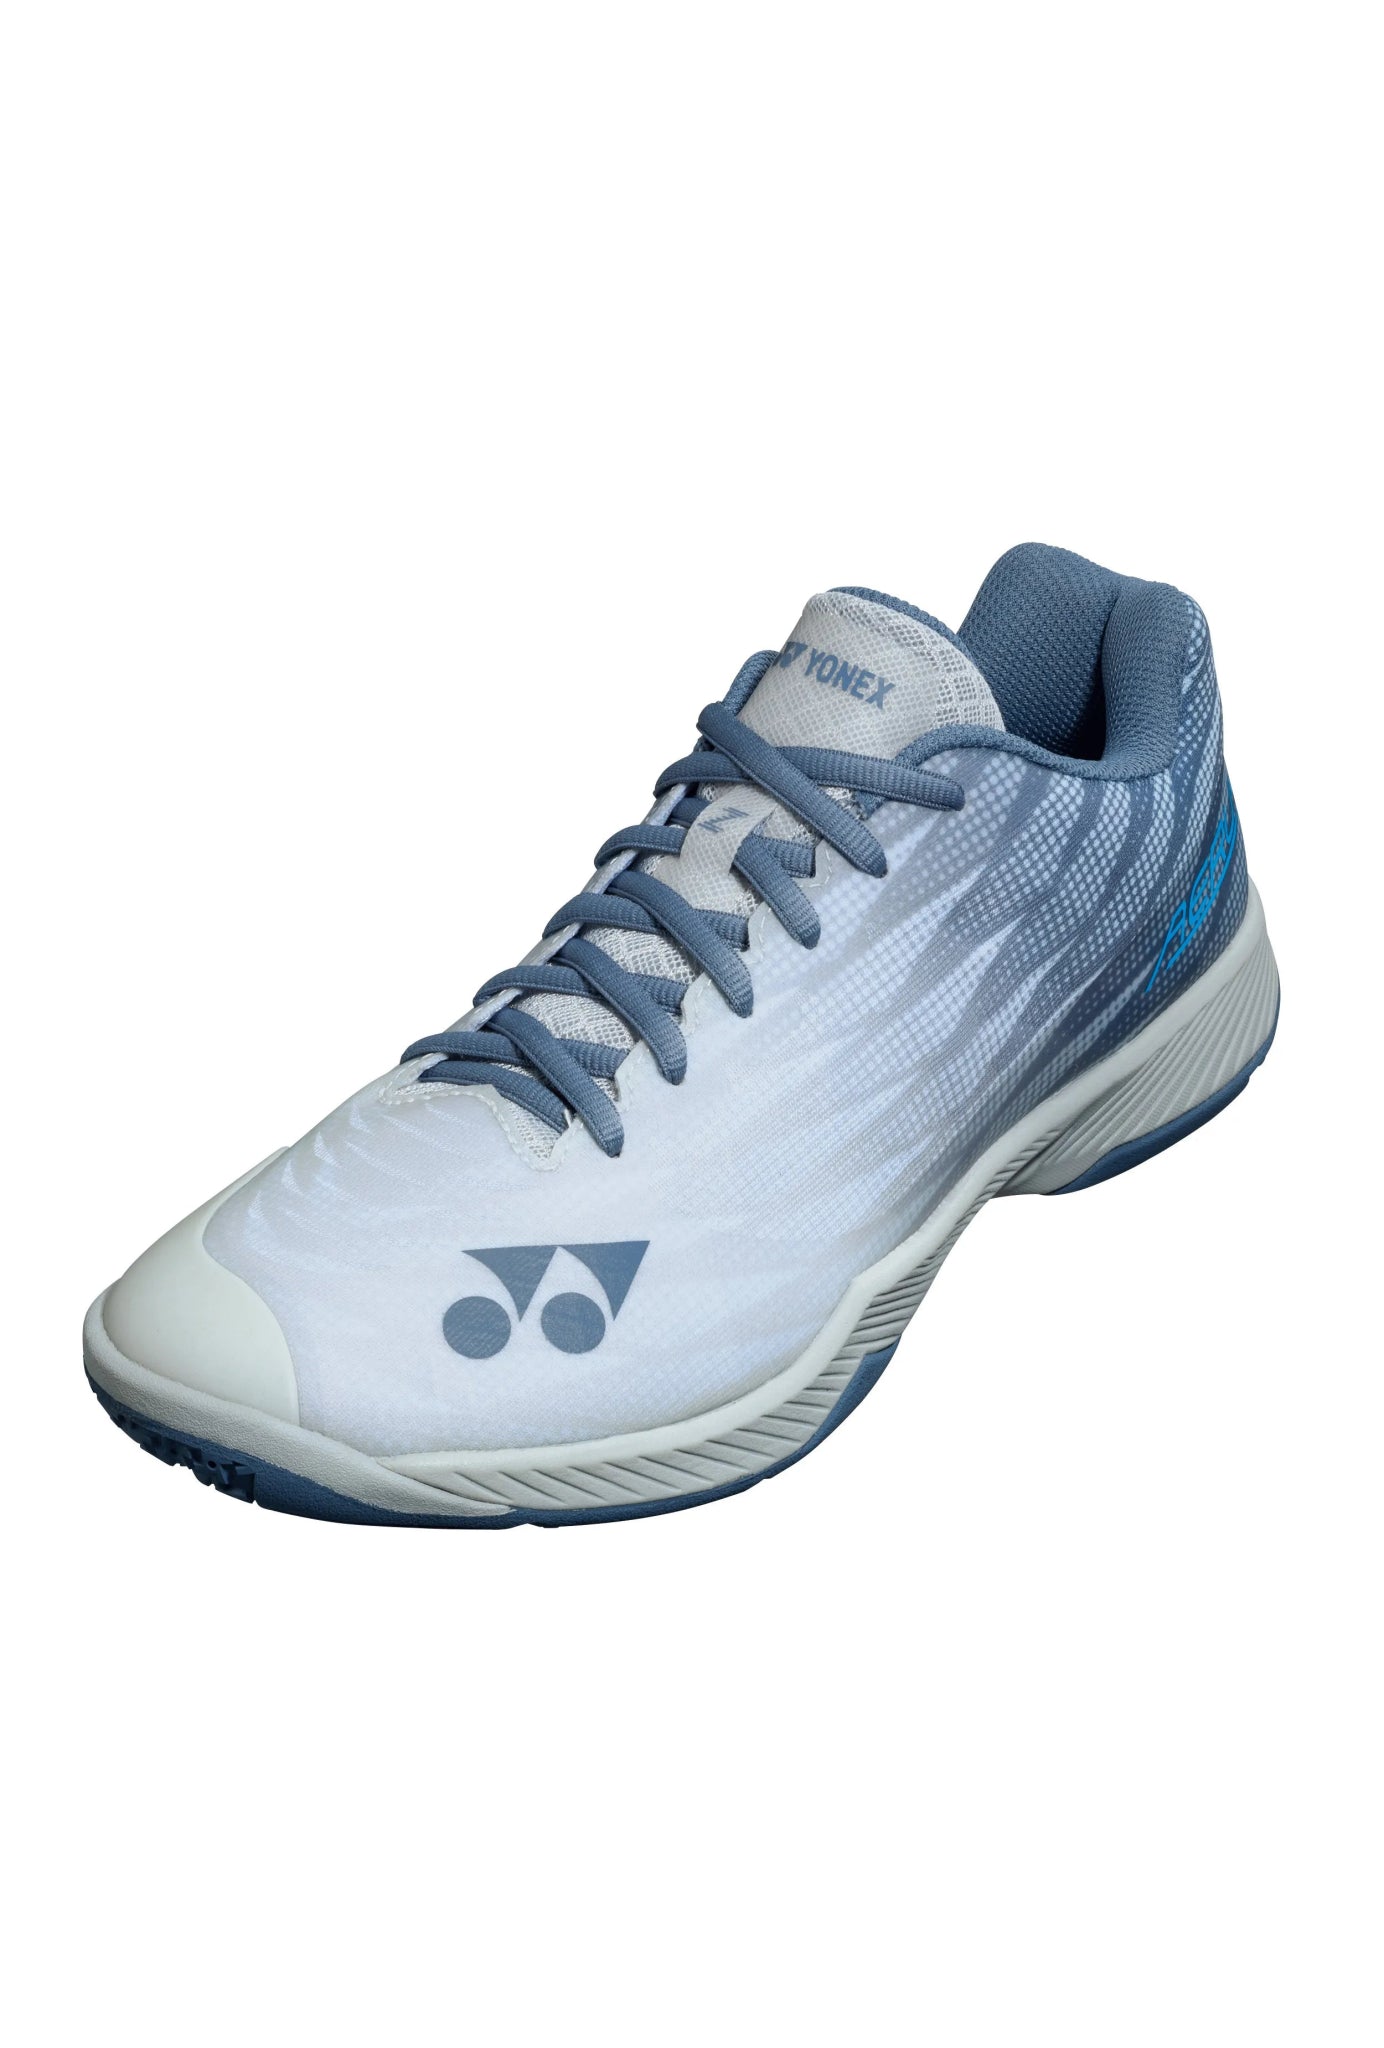 Yonex Badminton Shoe Power Cushion Aerus Z2 Men (Blue Gray) - Nexus Badminton